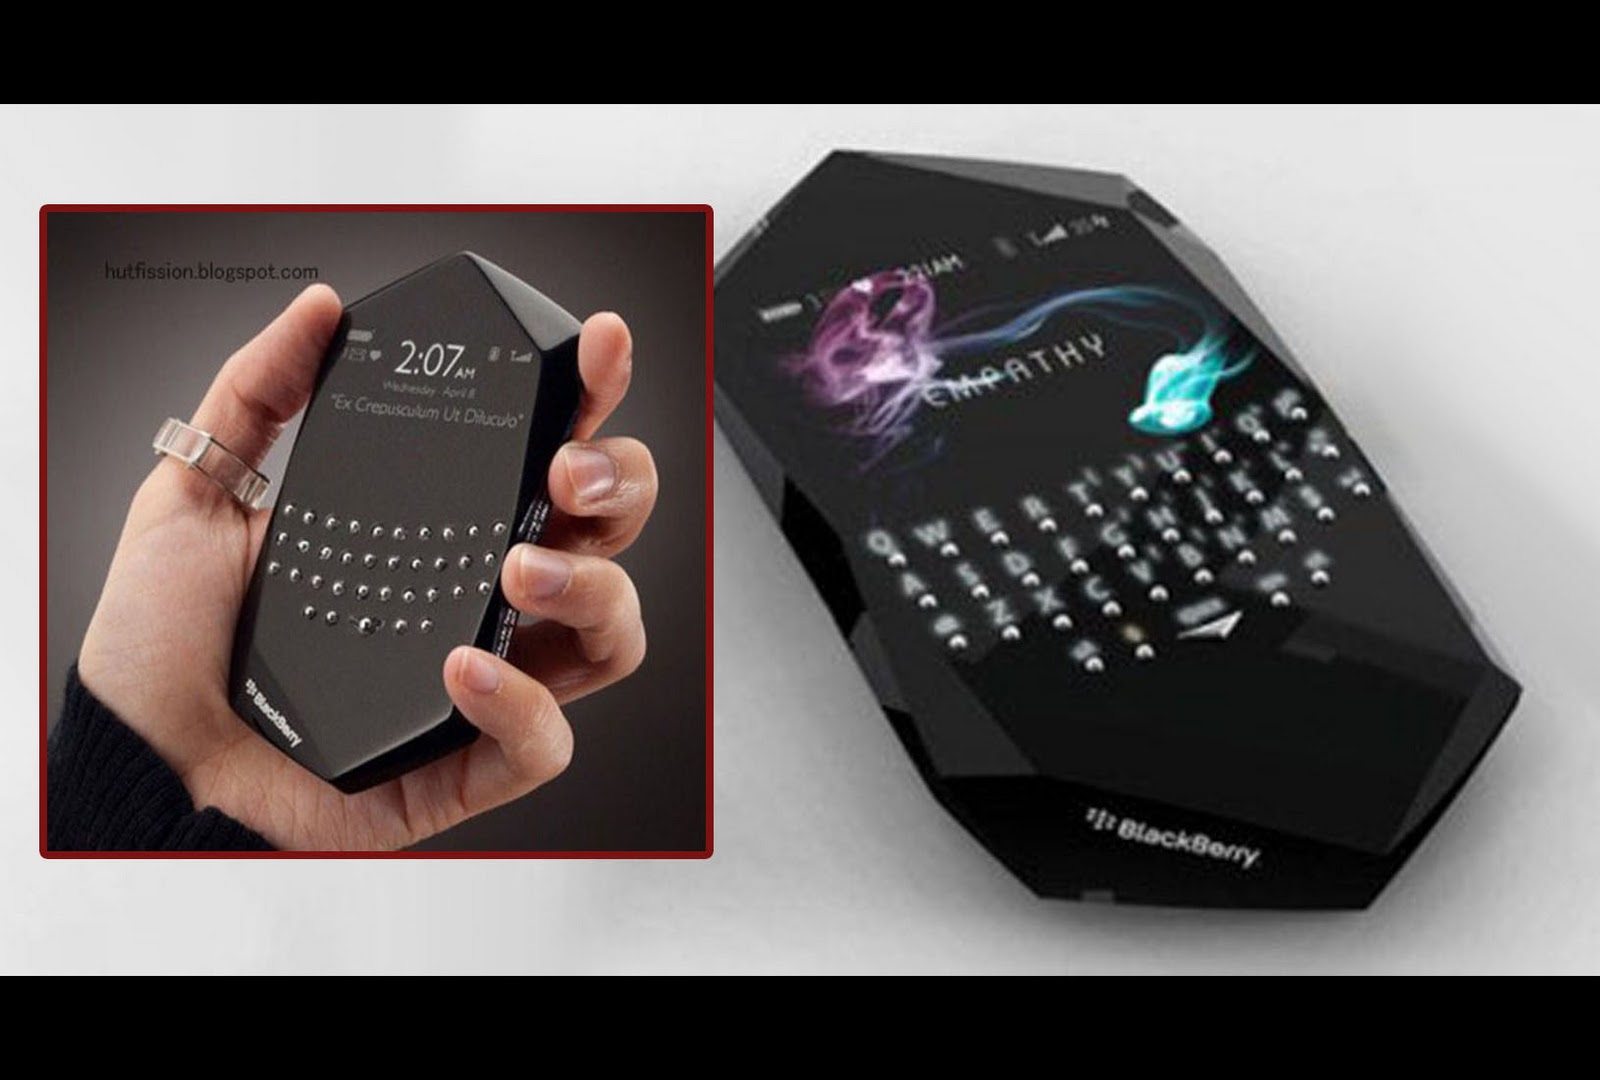 https://blogger.googleusercontent.com/img/b/R29vZ2xl/AVvXsEg-D4yV3UIqL-2ifBtSJ15Cf-NNd77gWy4KRHu8HthZVllL4T1WfouBsTRM2ZbmQhOs3LhKSlrYiu1WPghBJOgfoJ35PA3D3vHAWxYBV63mJFKTjikk9po5jDpnTf1TJYtbELCEhKGqJC8/s1600/Concept+smart+Phone+Blackberry+Empathy+touchscreen+new+design+2012+2013.jpg